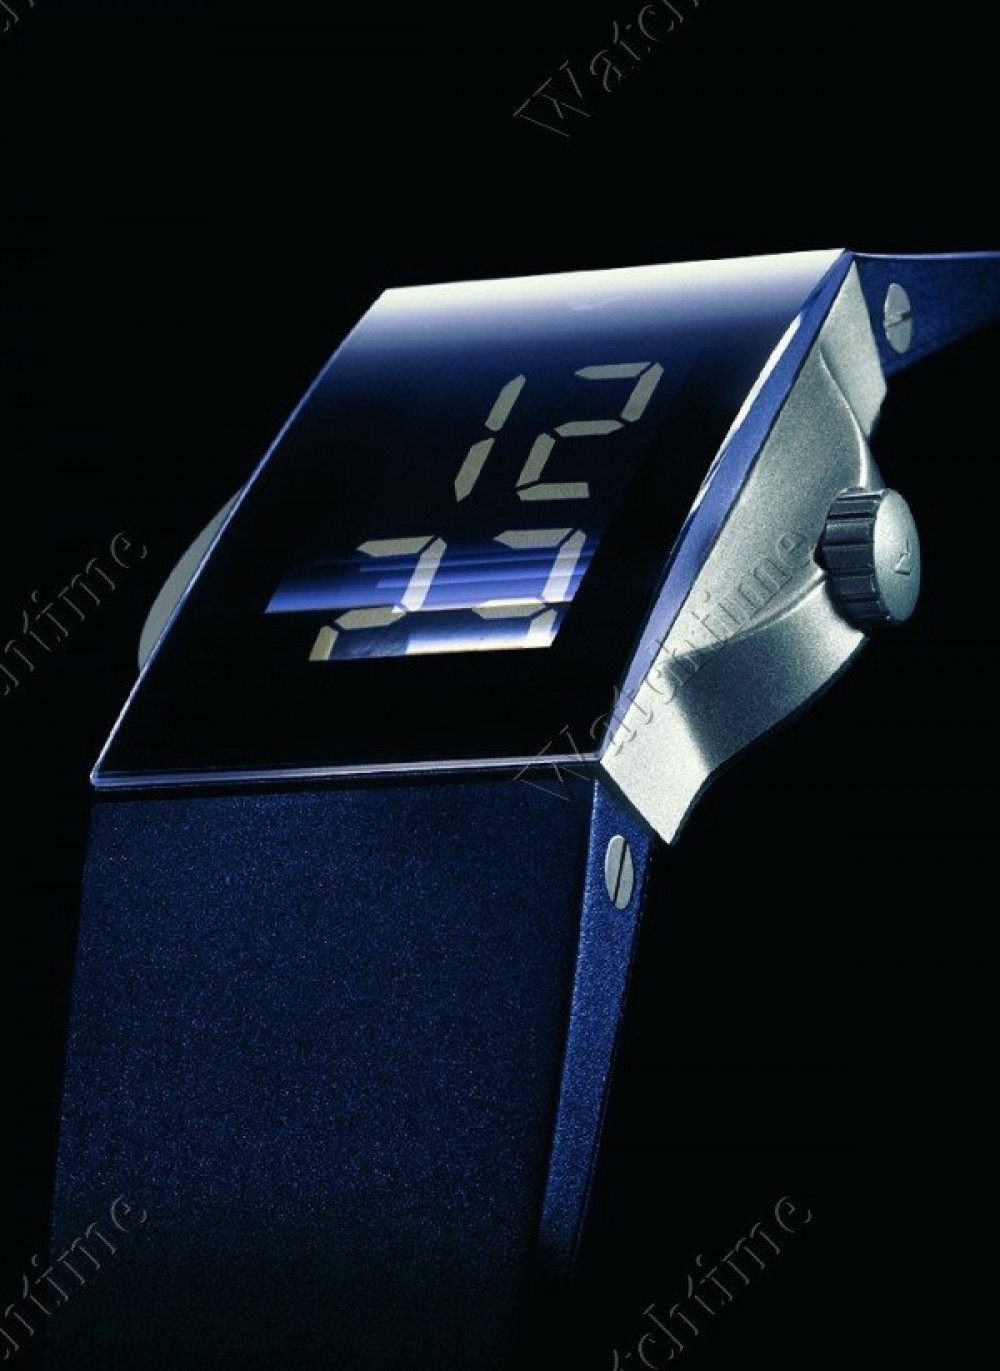 Zegarek firmy Ventura, model Sparc fx